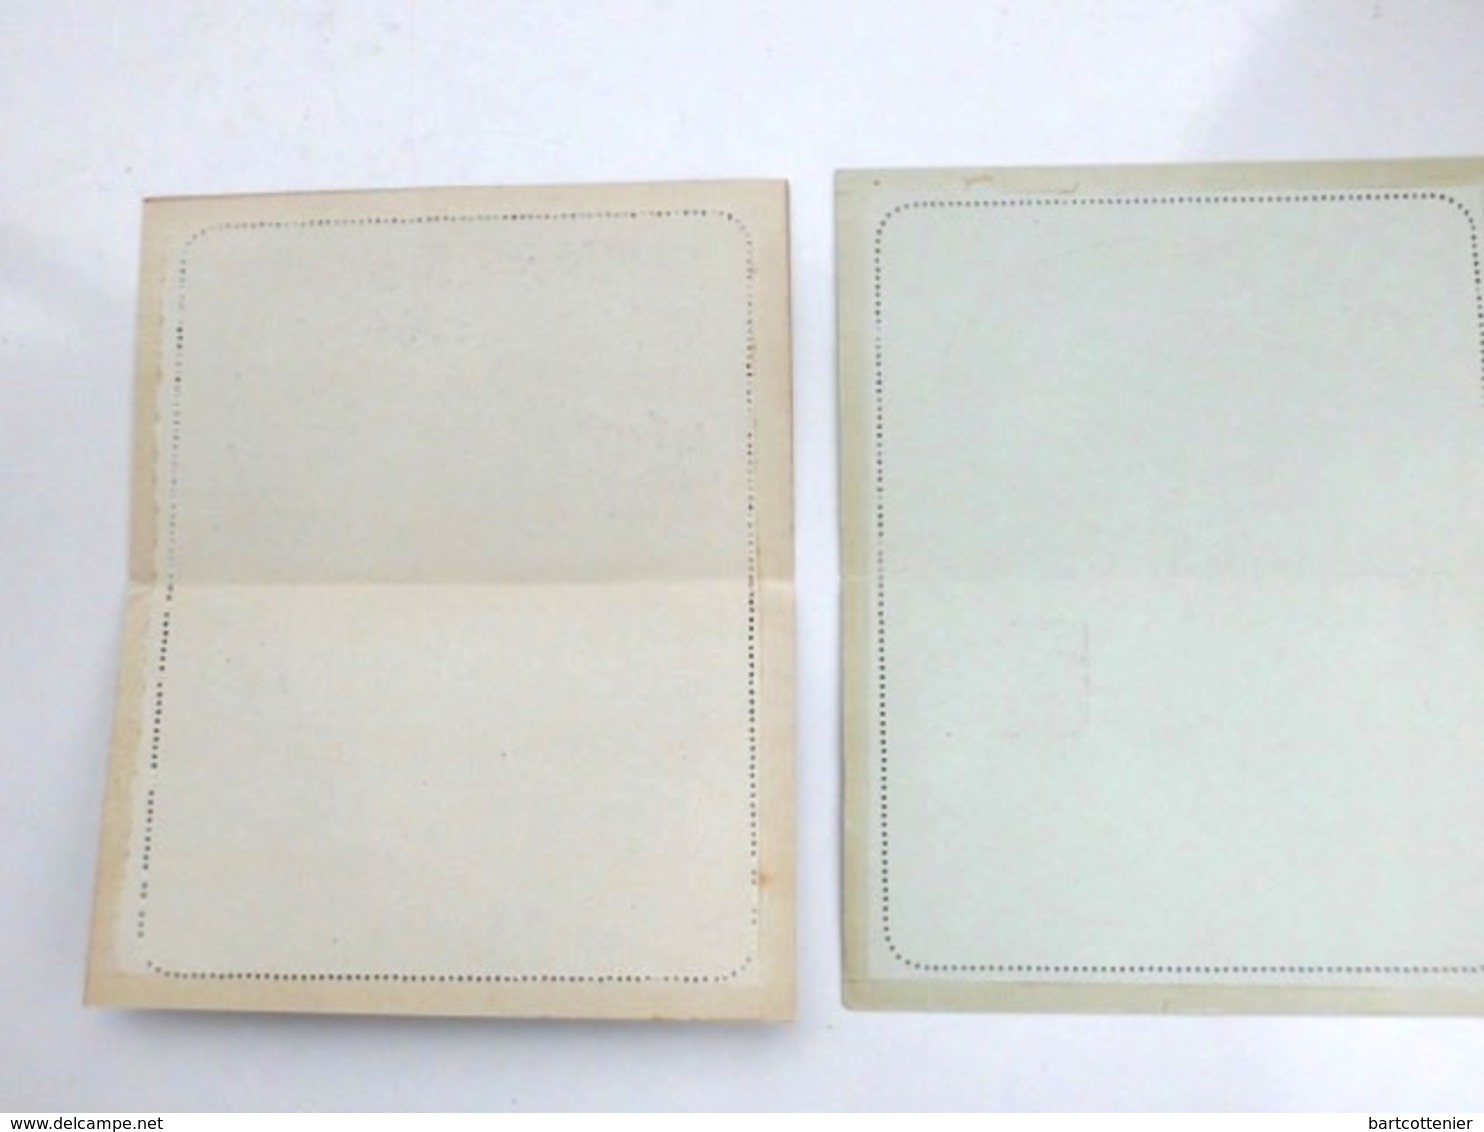 2 antieke briefkaarten Australië / Tasmanië (1905/1915)